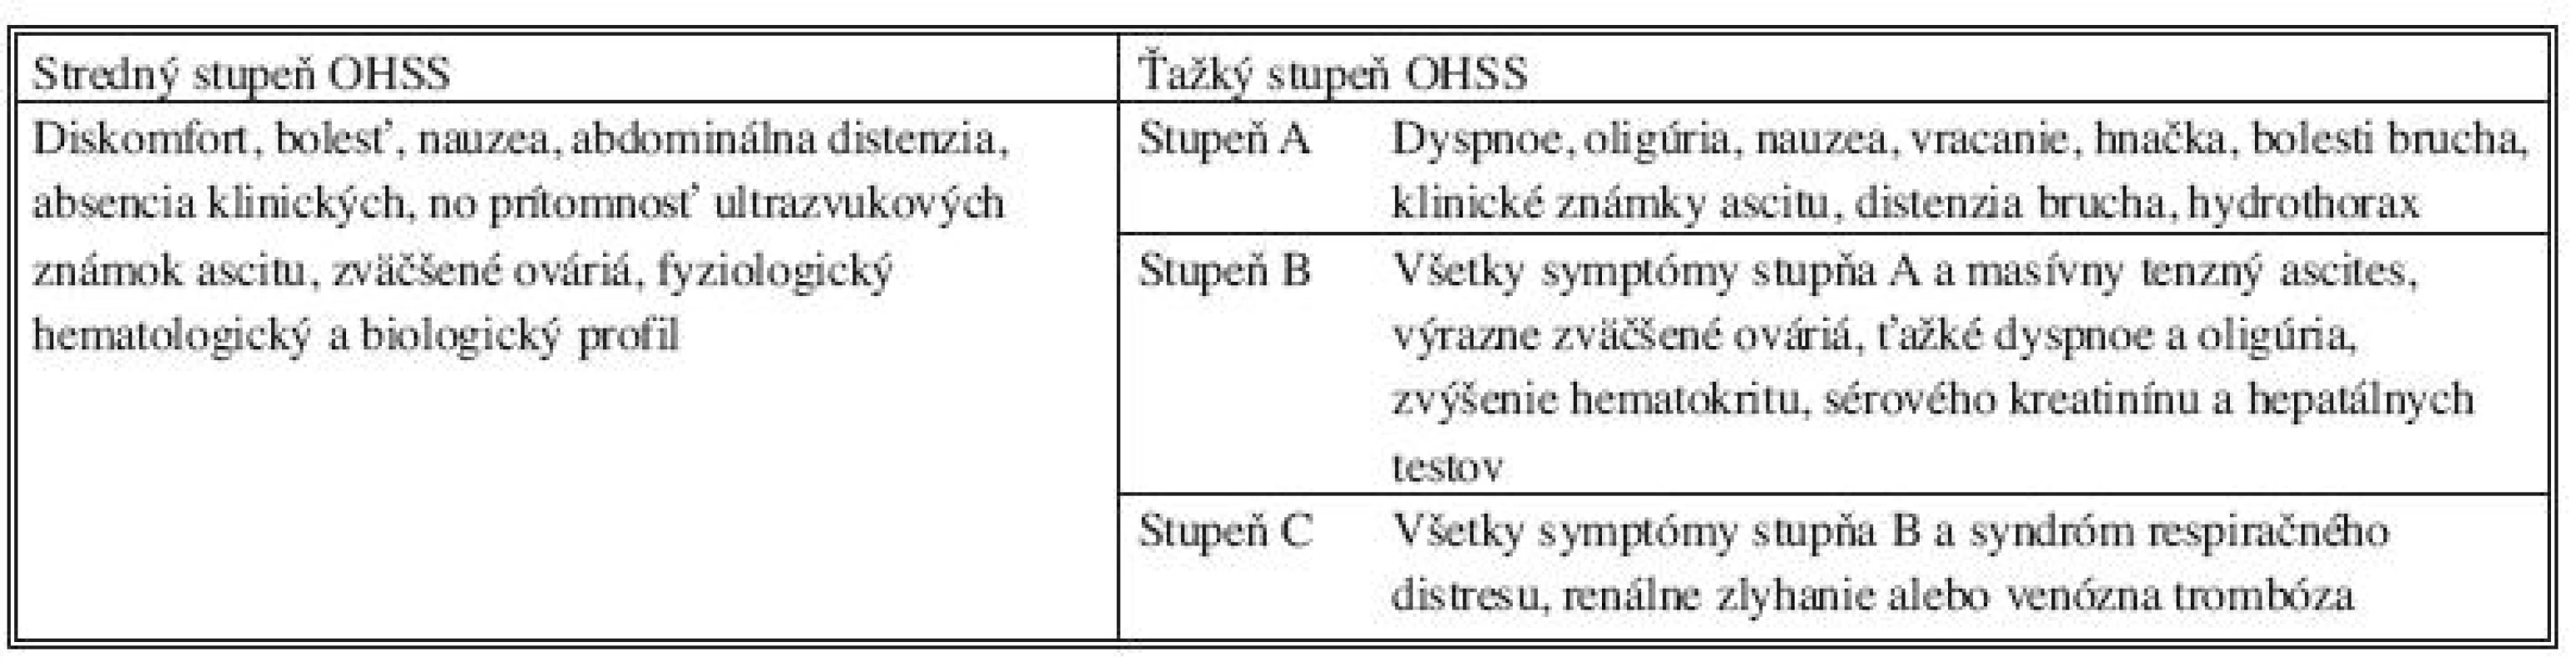 Klasifikácia OHSS z roku 1999 [7]
Tab. 1. Ovarial hyperstimulation syndrome (OHSS) classification, 1999 [7]